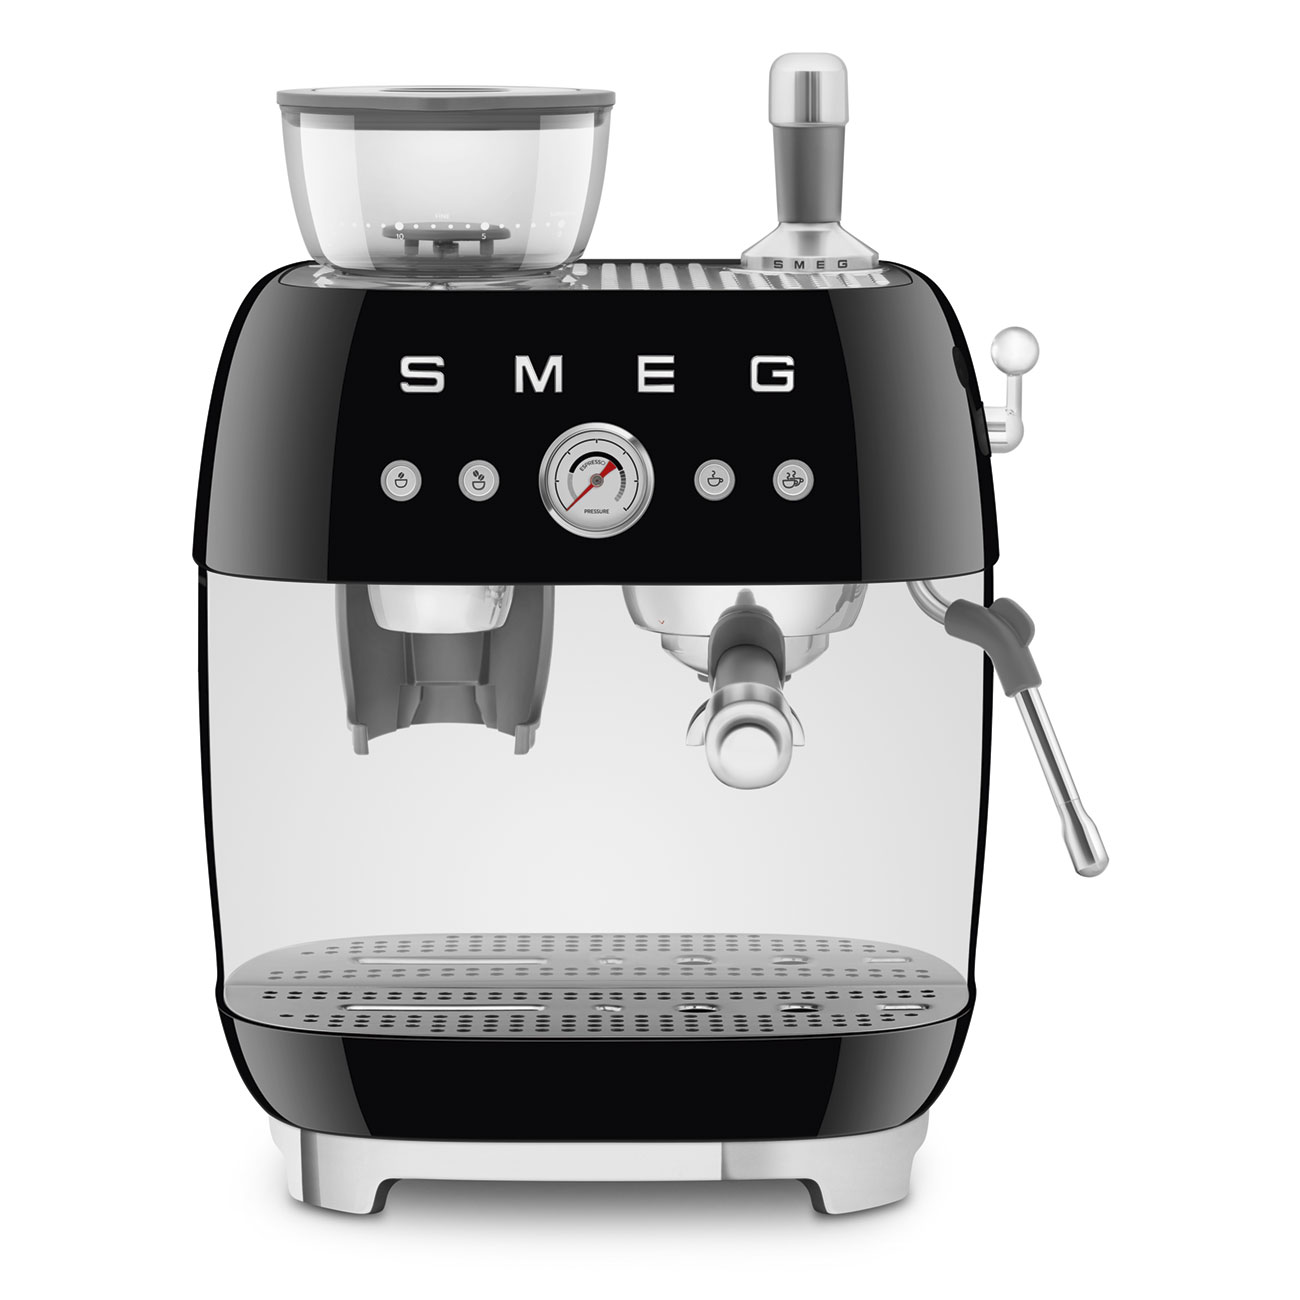 Smeg Black Espresso Manual Coffee Machine with Grinder_1